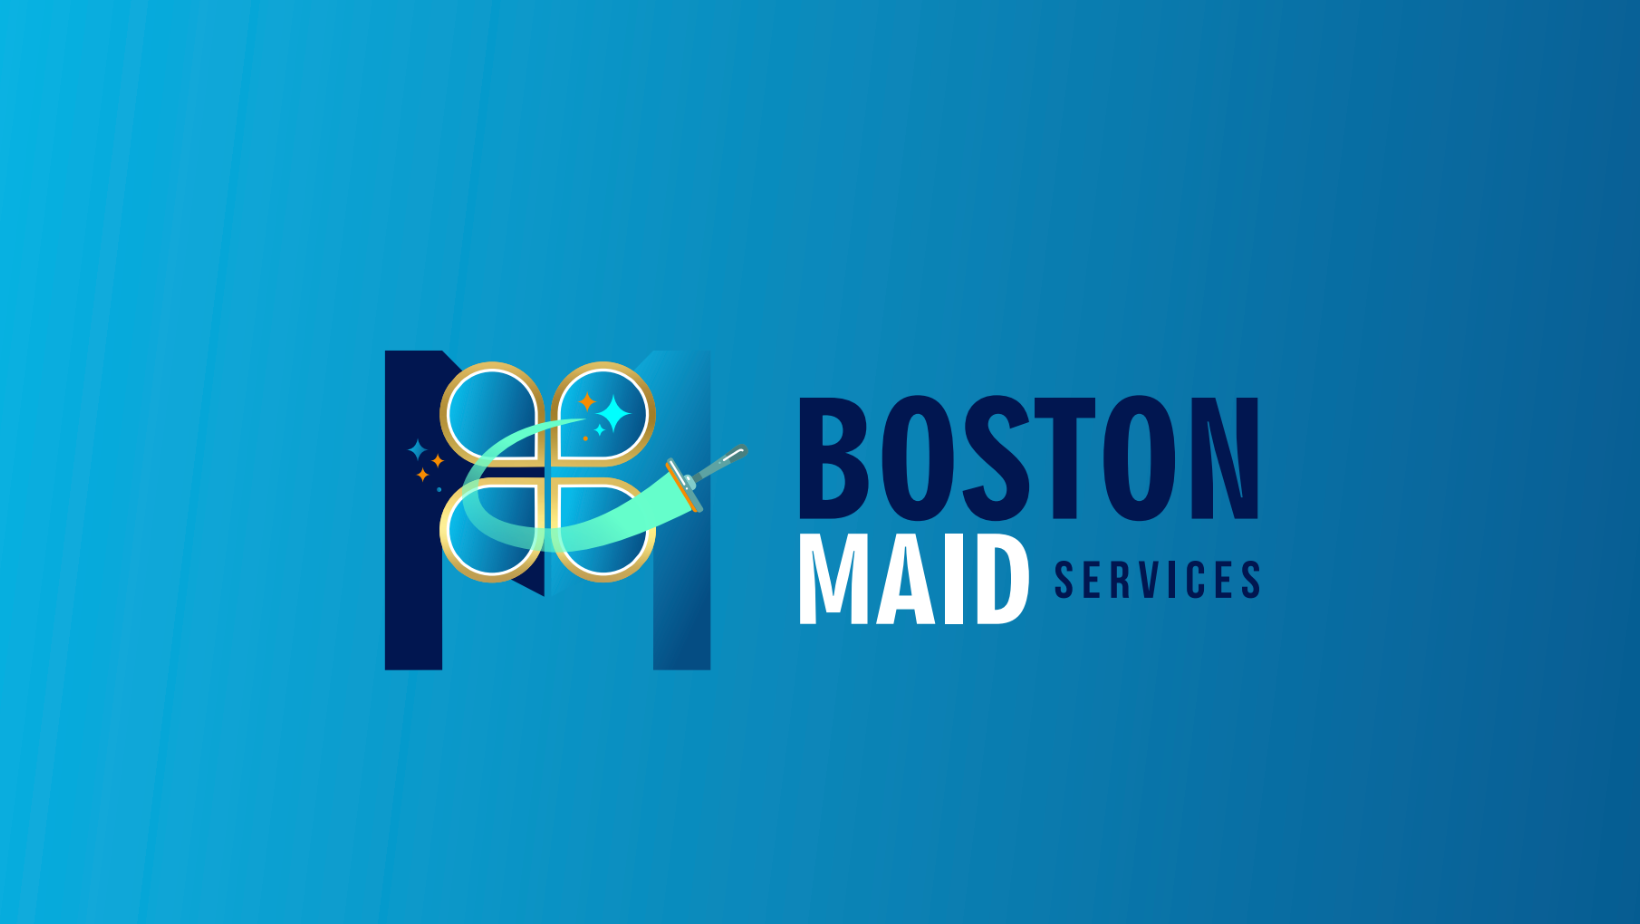 Boston Maid Services, Inc